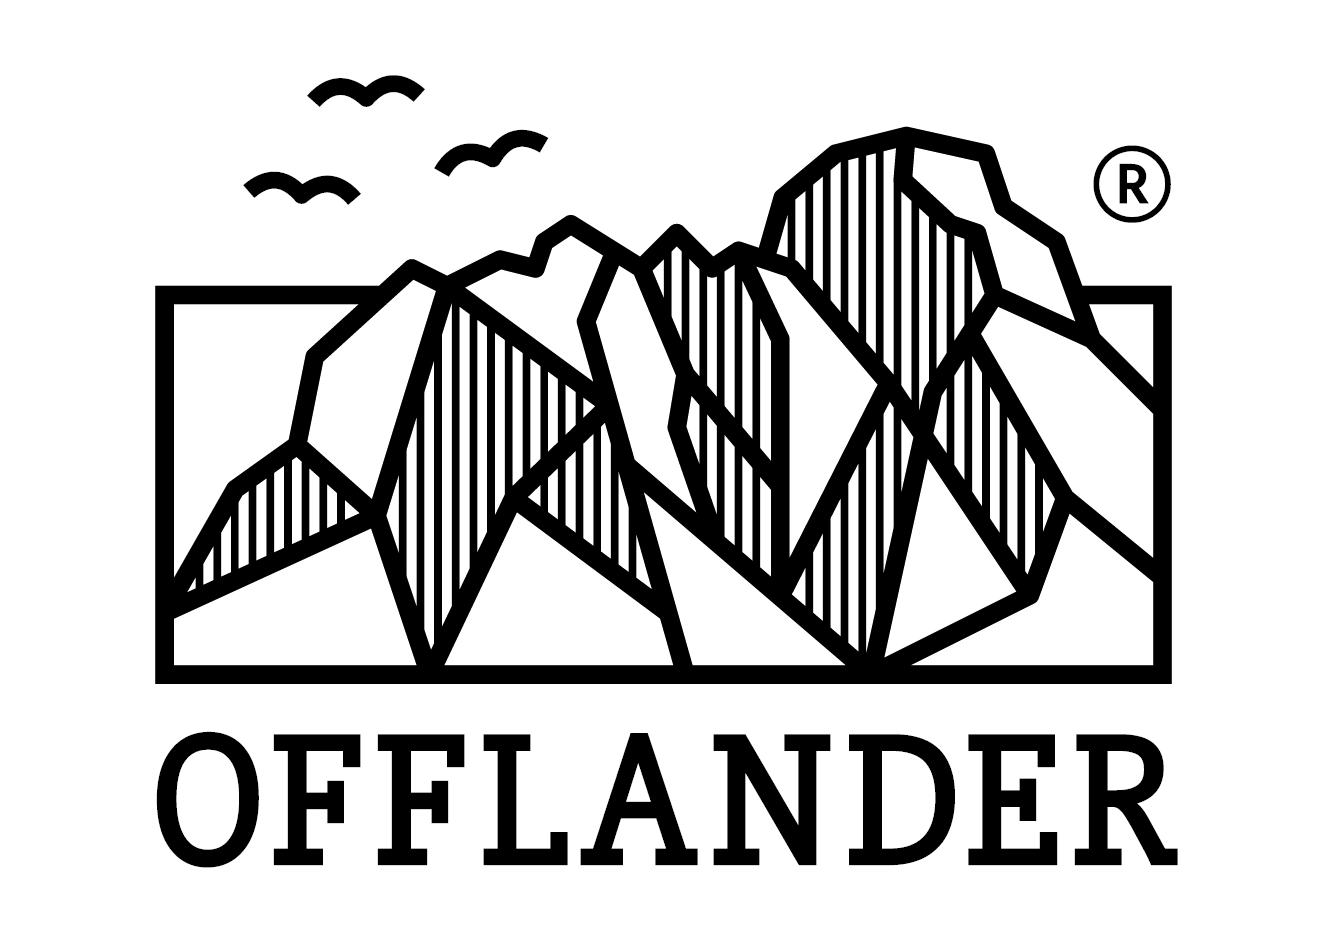 offlander